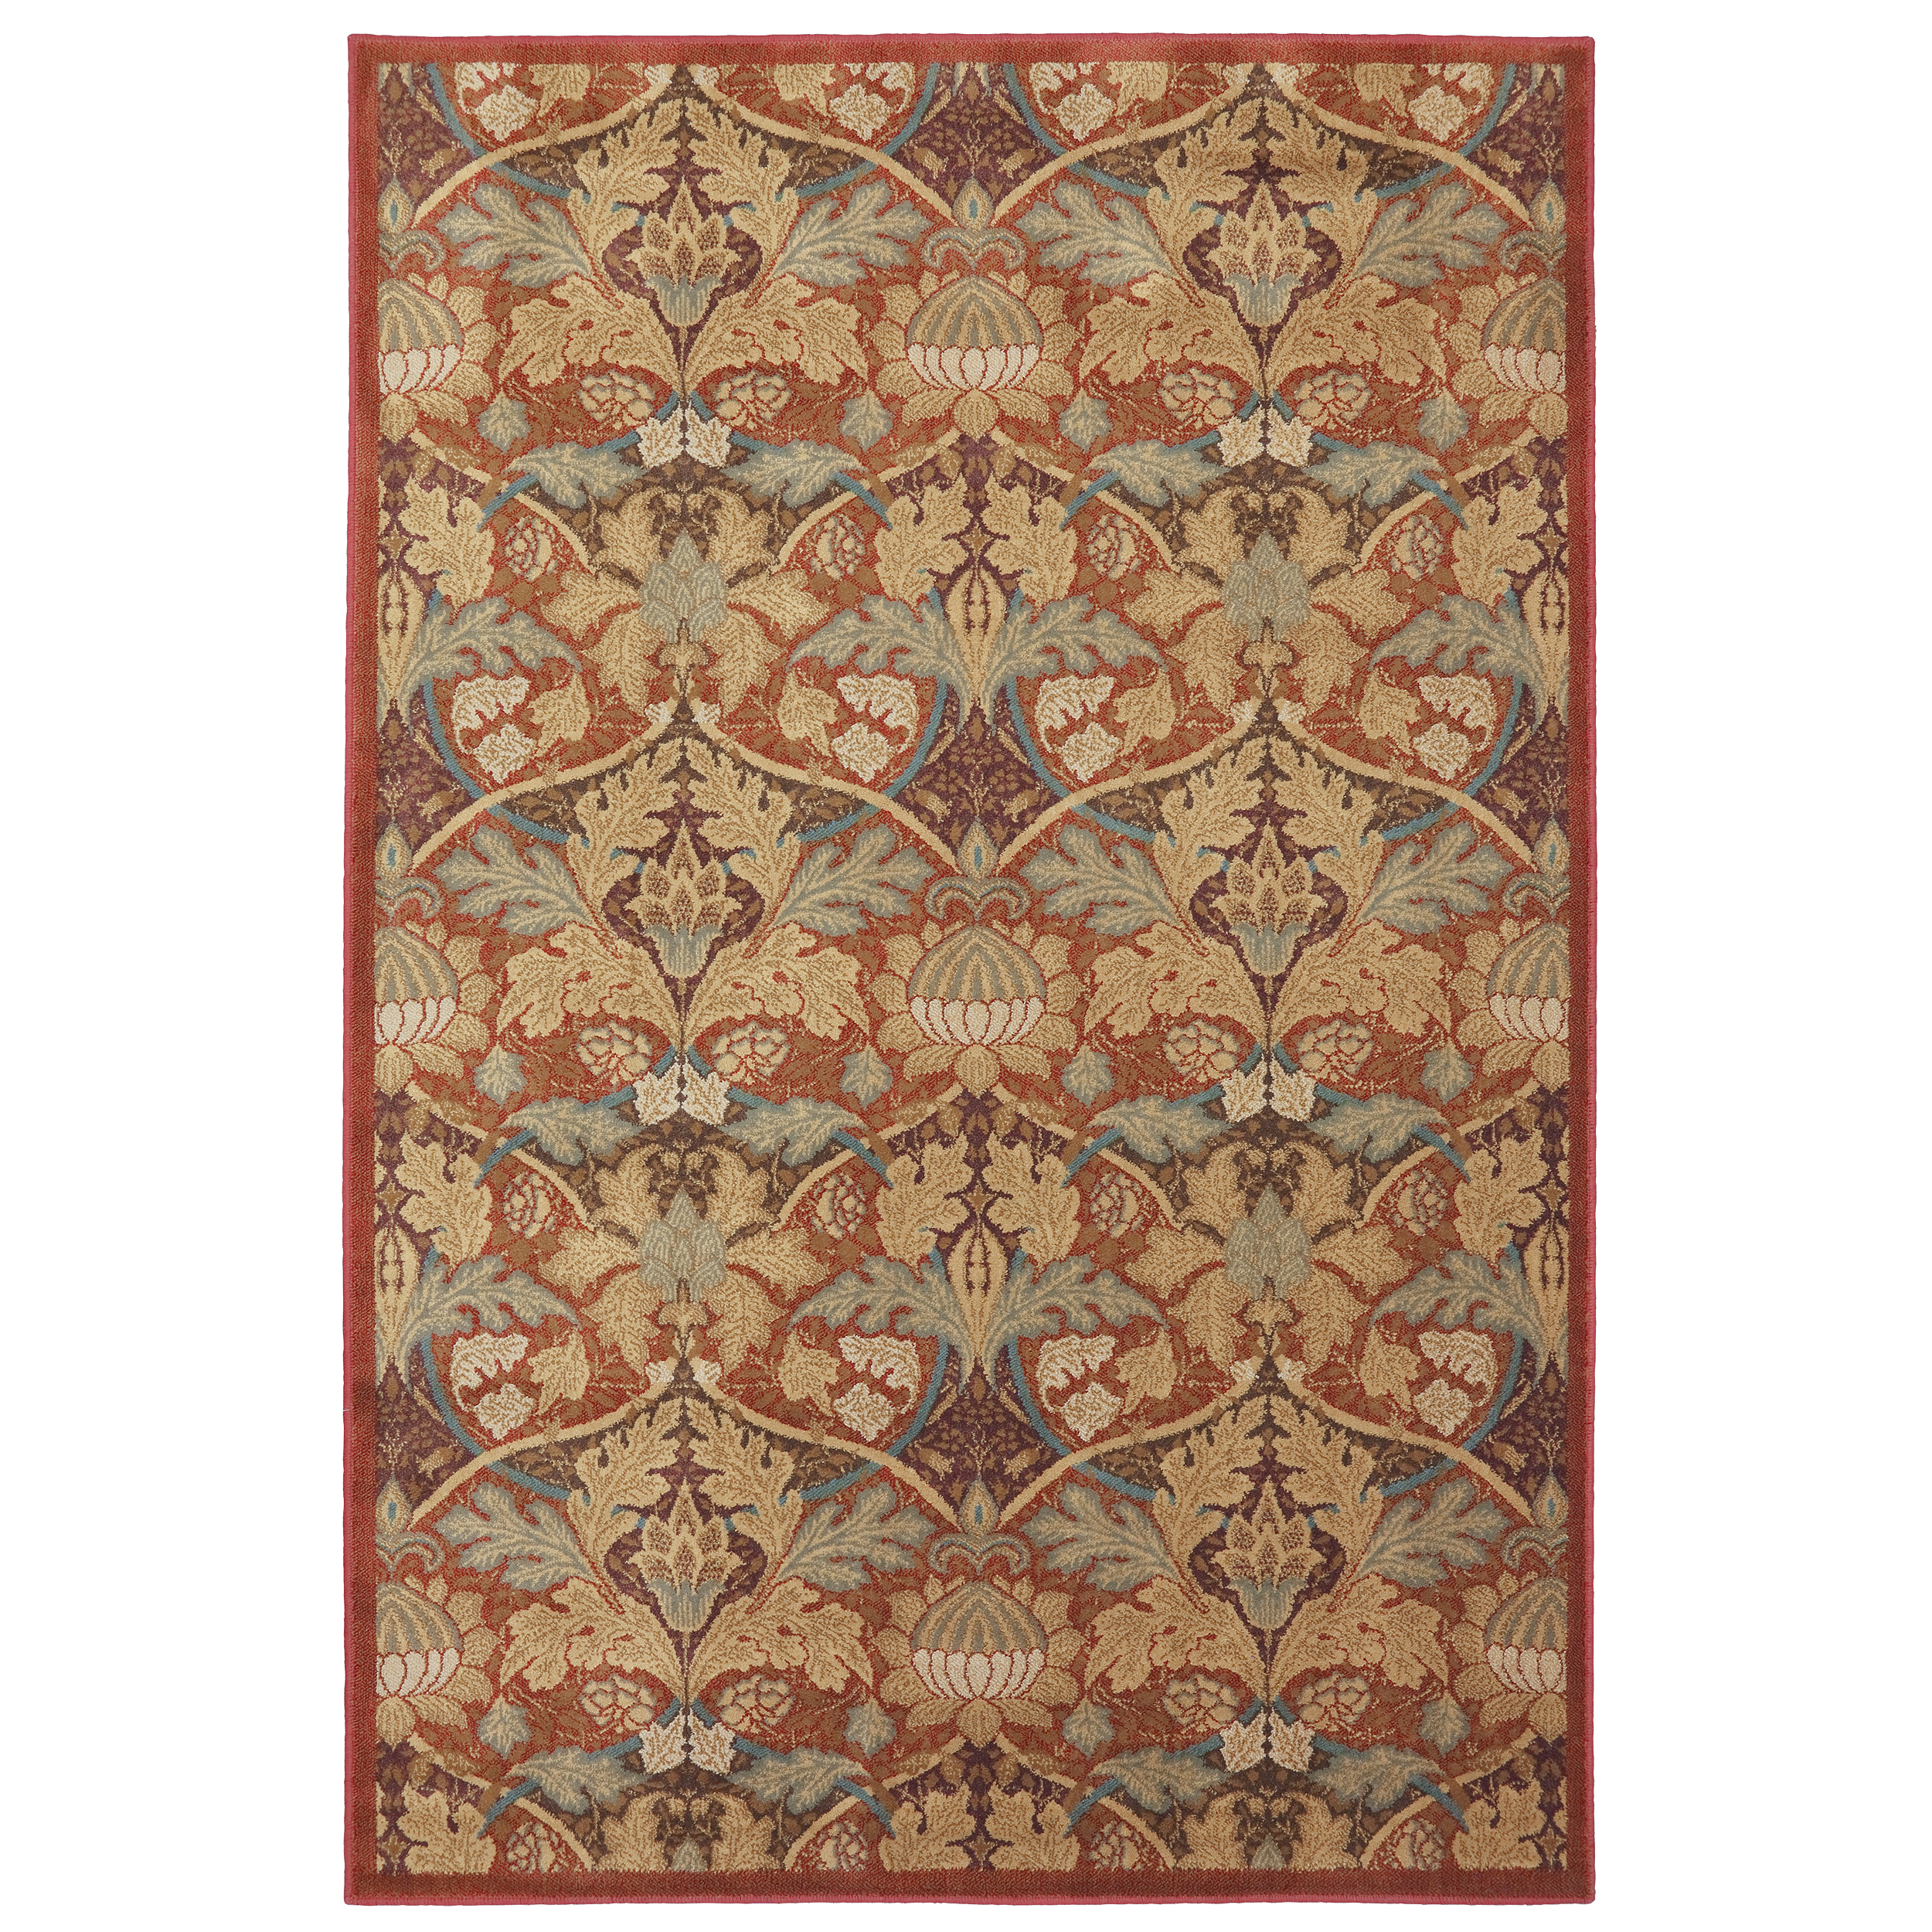 Traditional rug, dining room rug, Madison Burlwood Dark Butter by American Rug Craftsmen